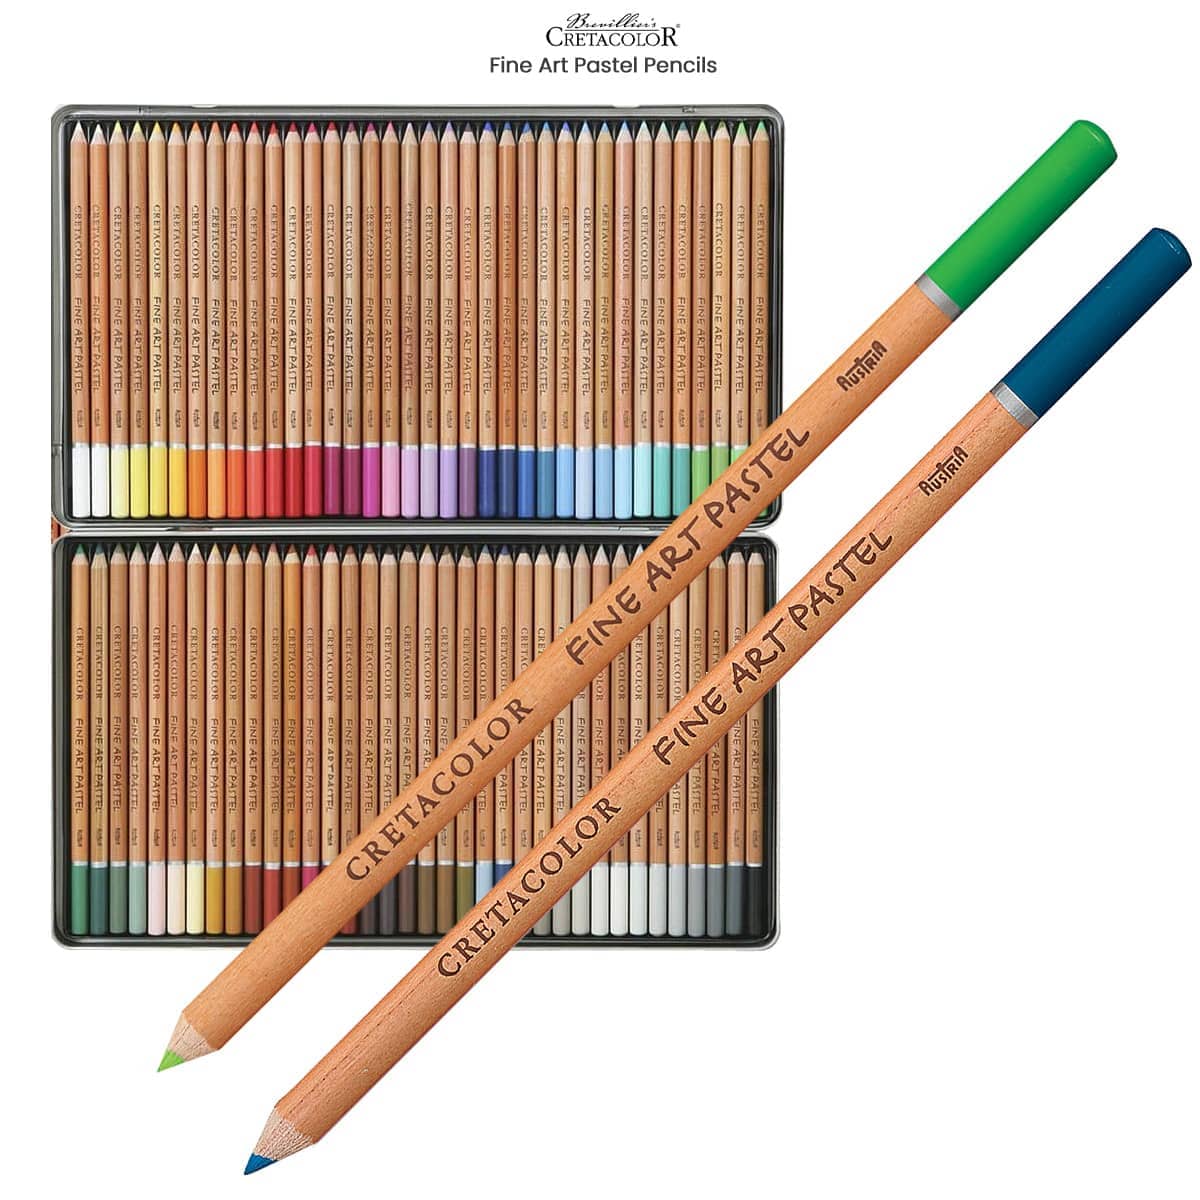 Category: Pastel Pencil Sets